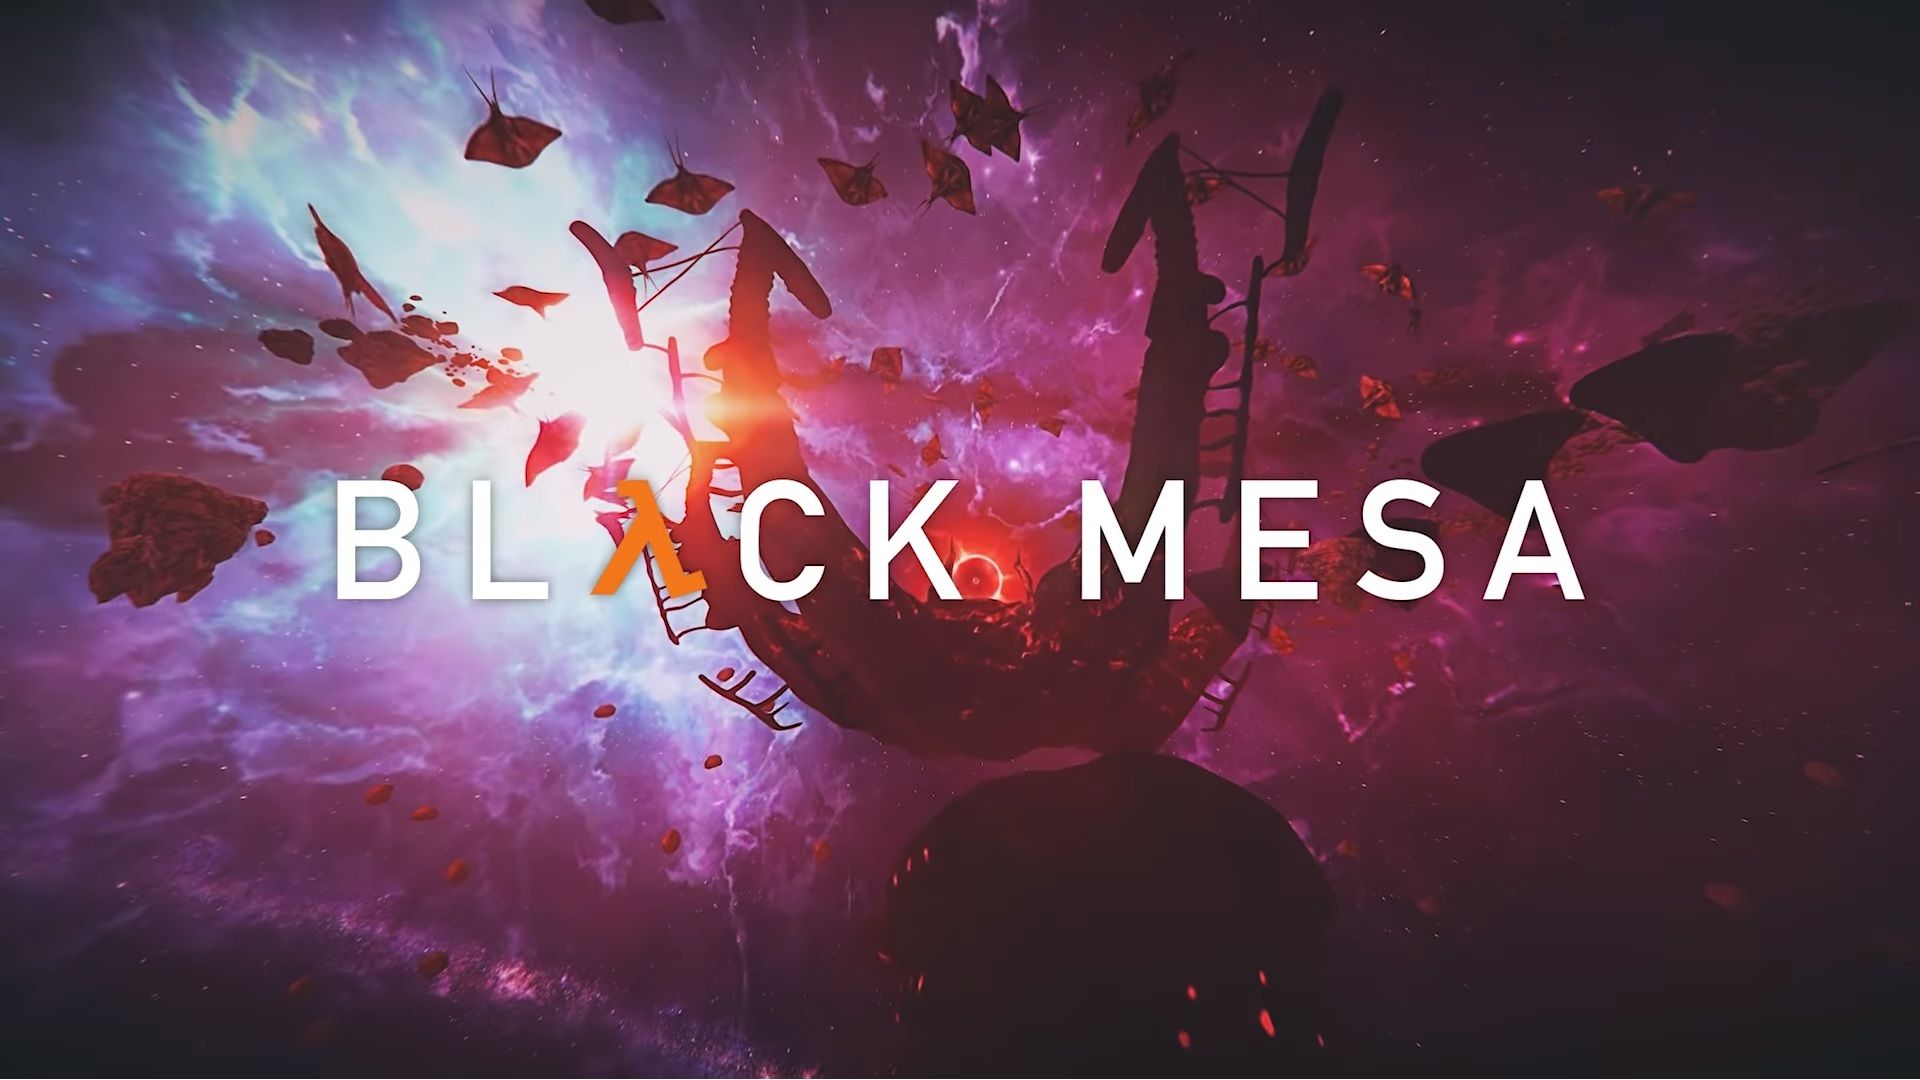 Let’s Play Black Mesa